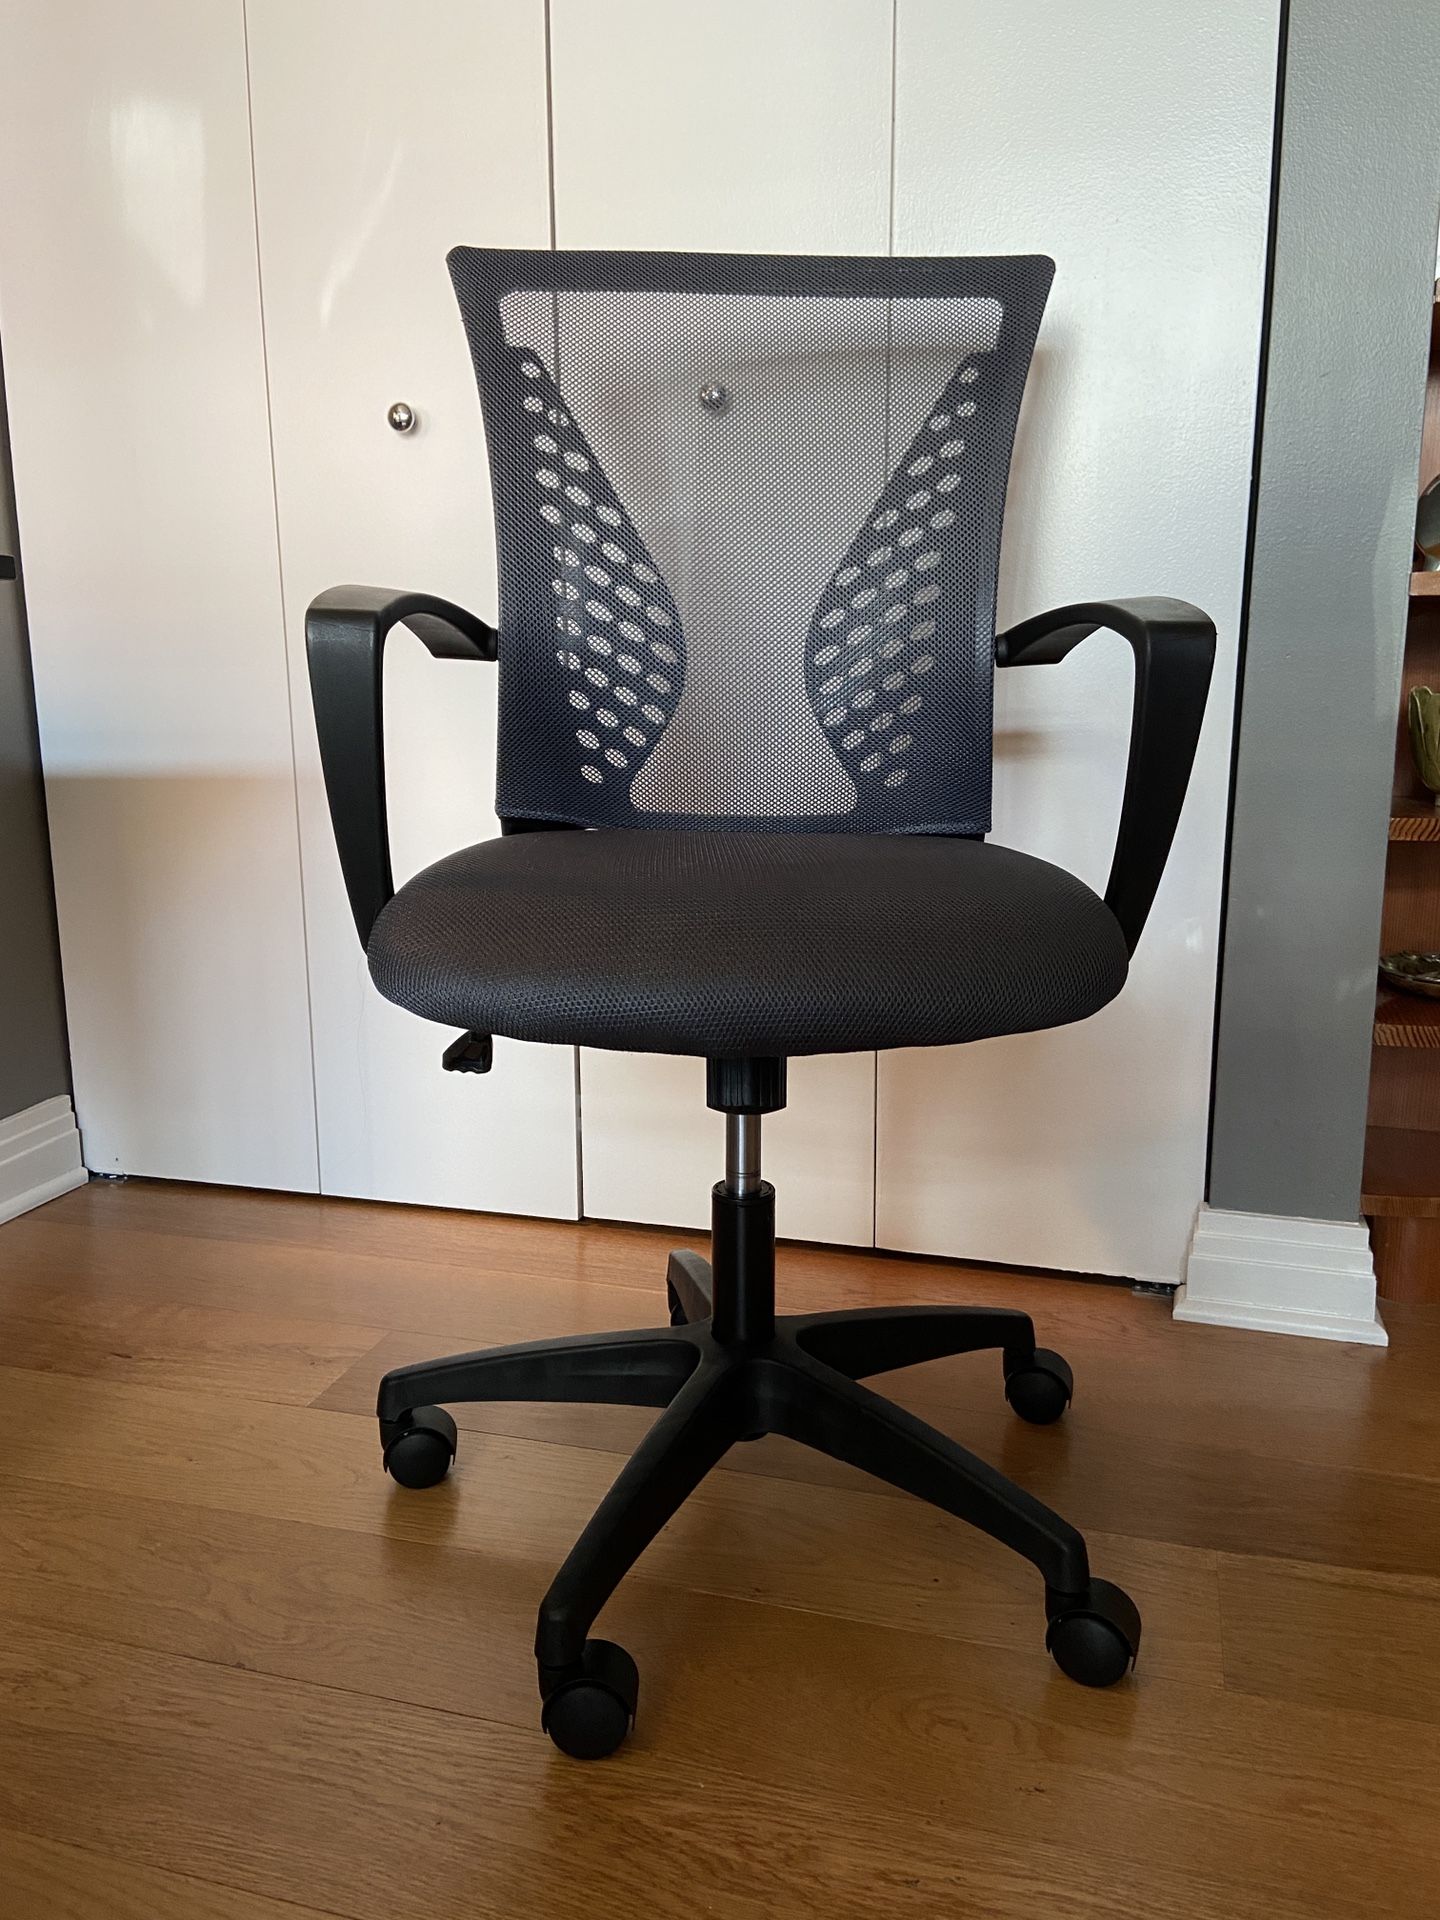 Almost New Ergonomic Computer Desk Chair